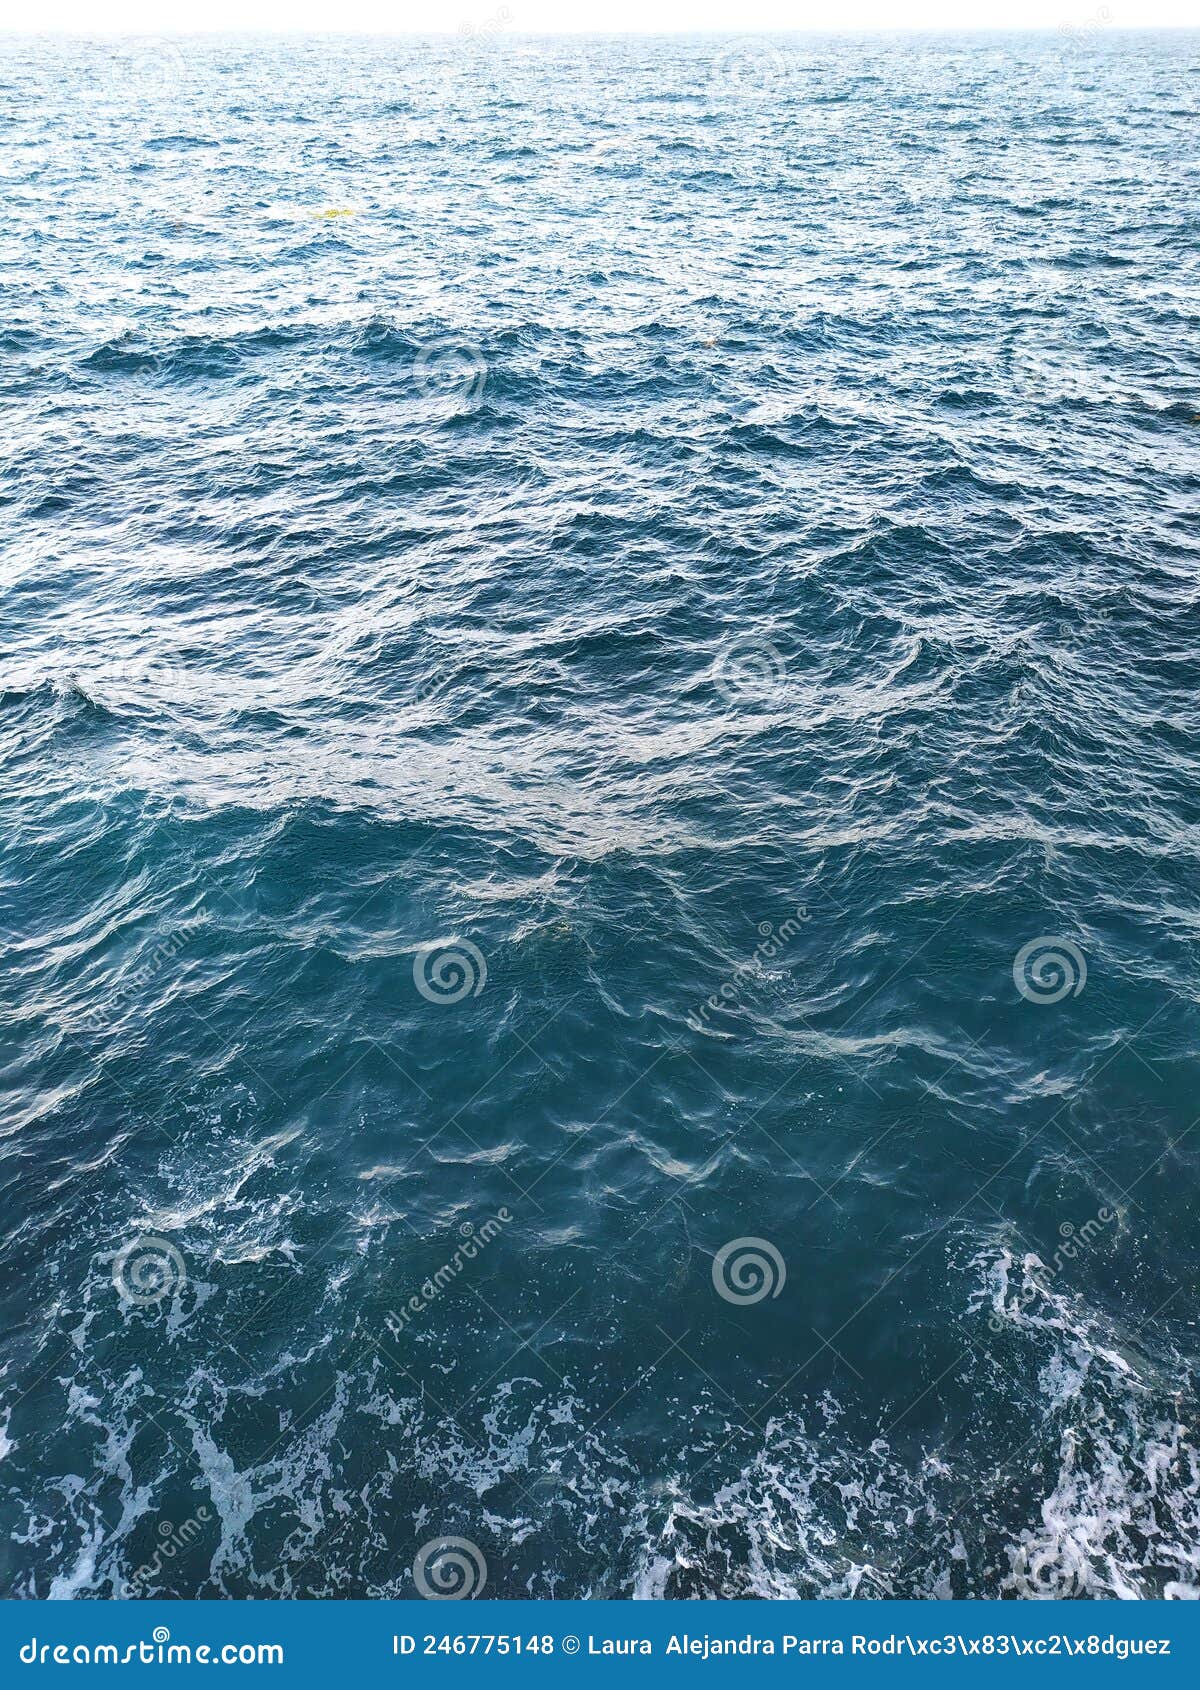 ttexture of the sea waters on a windy day. textura de las aguas del mar en un dÃÂ­a de viento